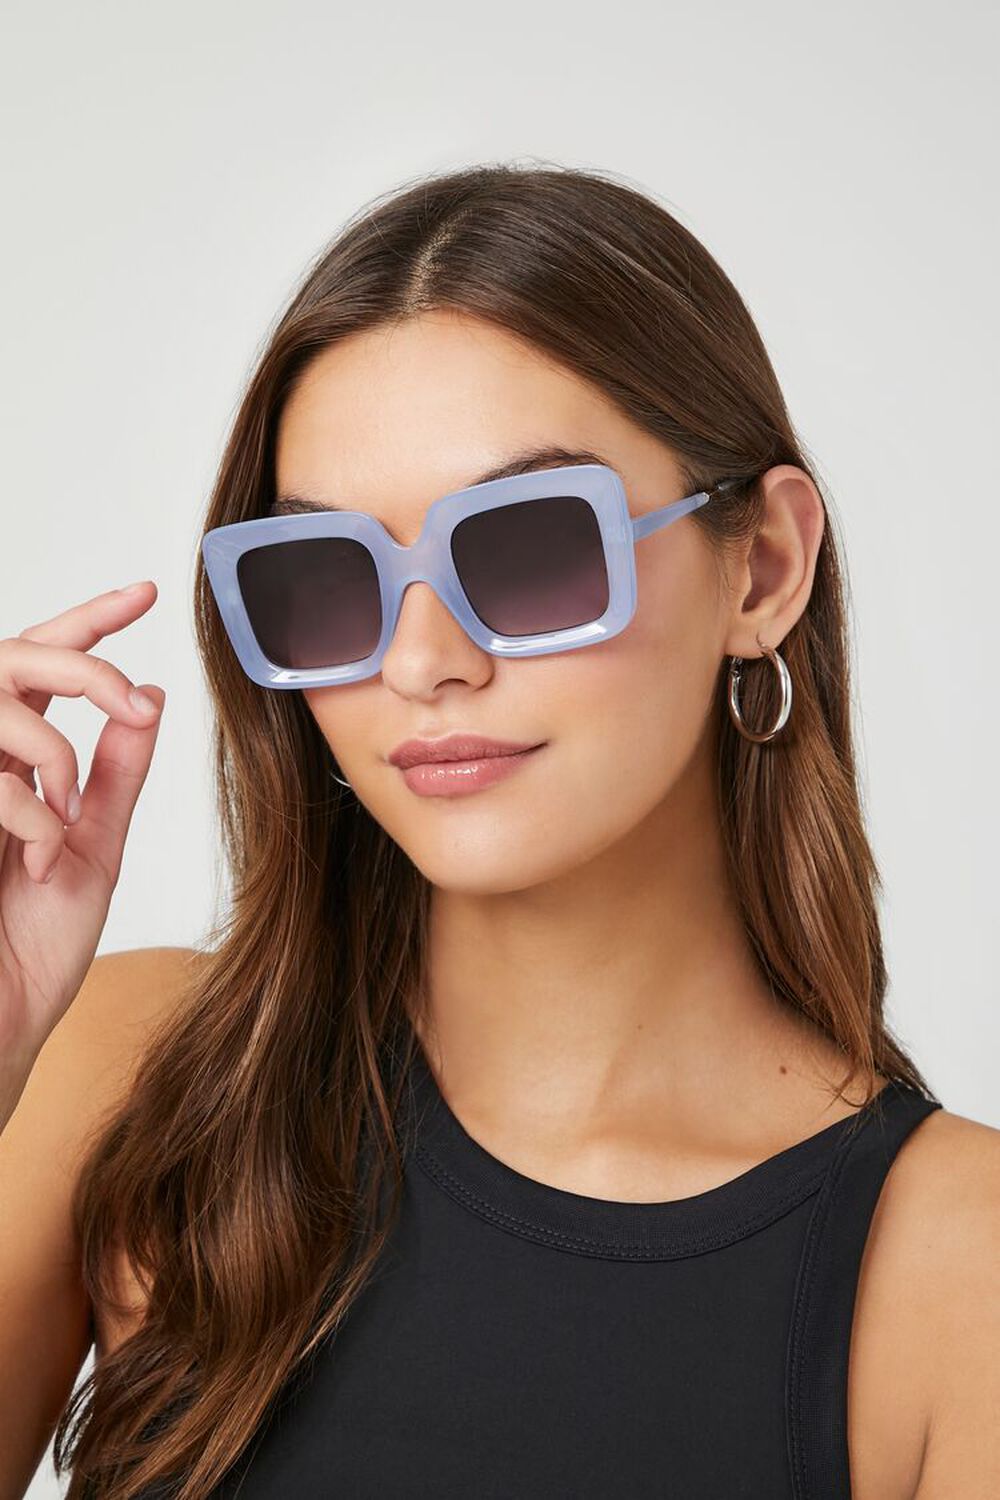 Square Frame Sunglasses, image 1